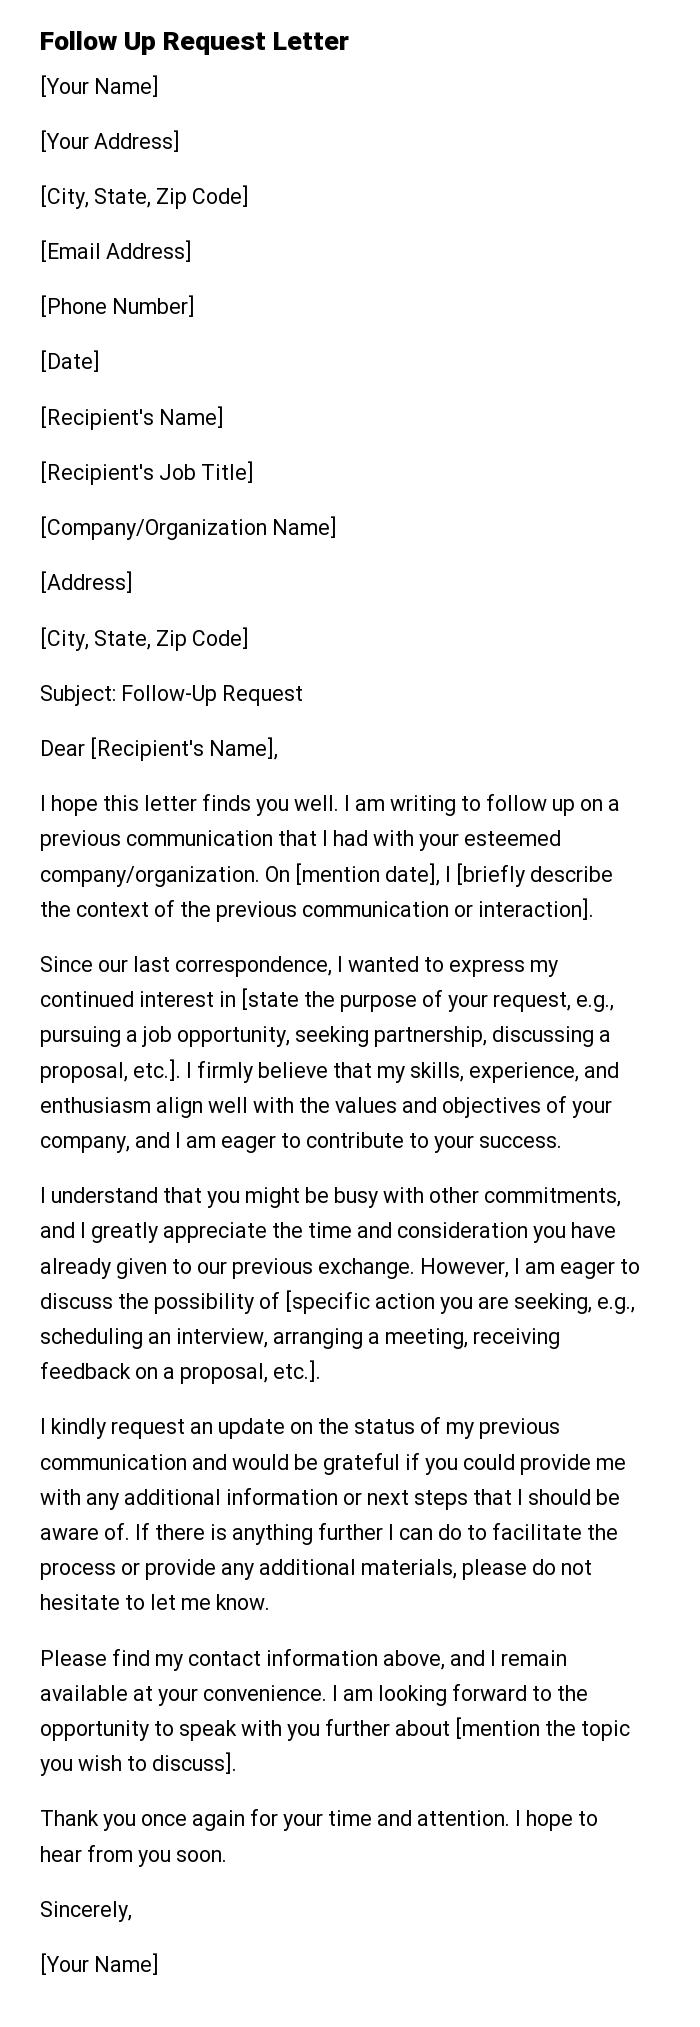 Follow Up Request Letter